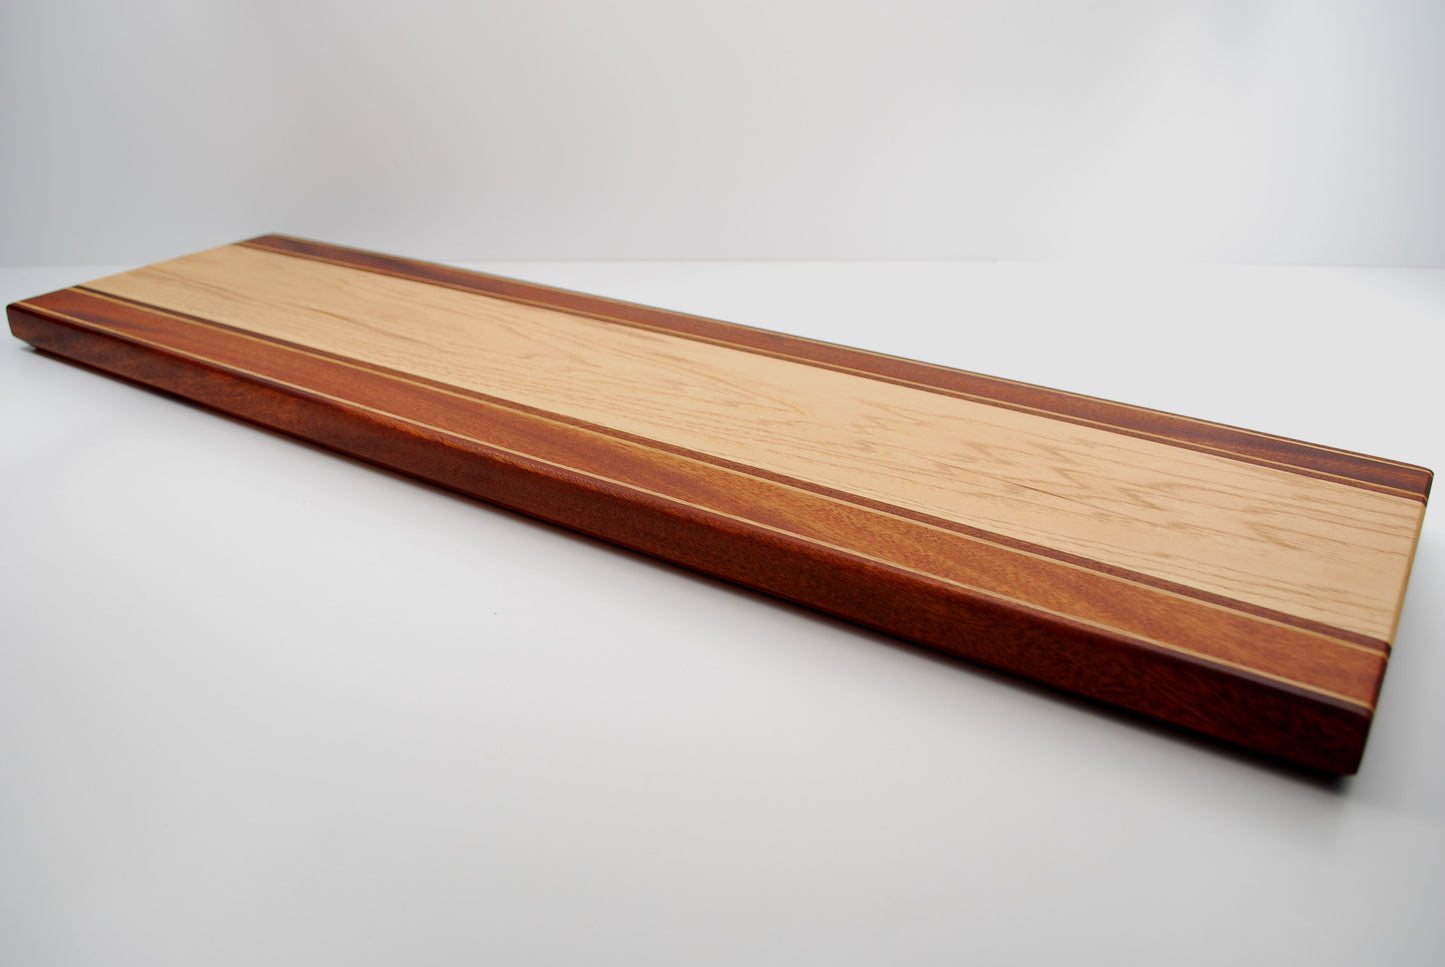 Wood Charcuterie Board - Sapele and Maple Wood